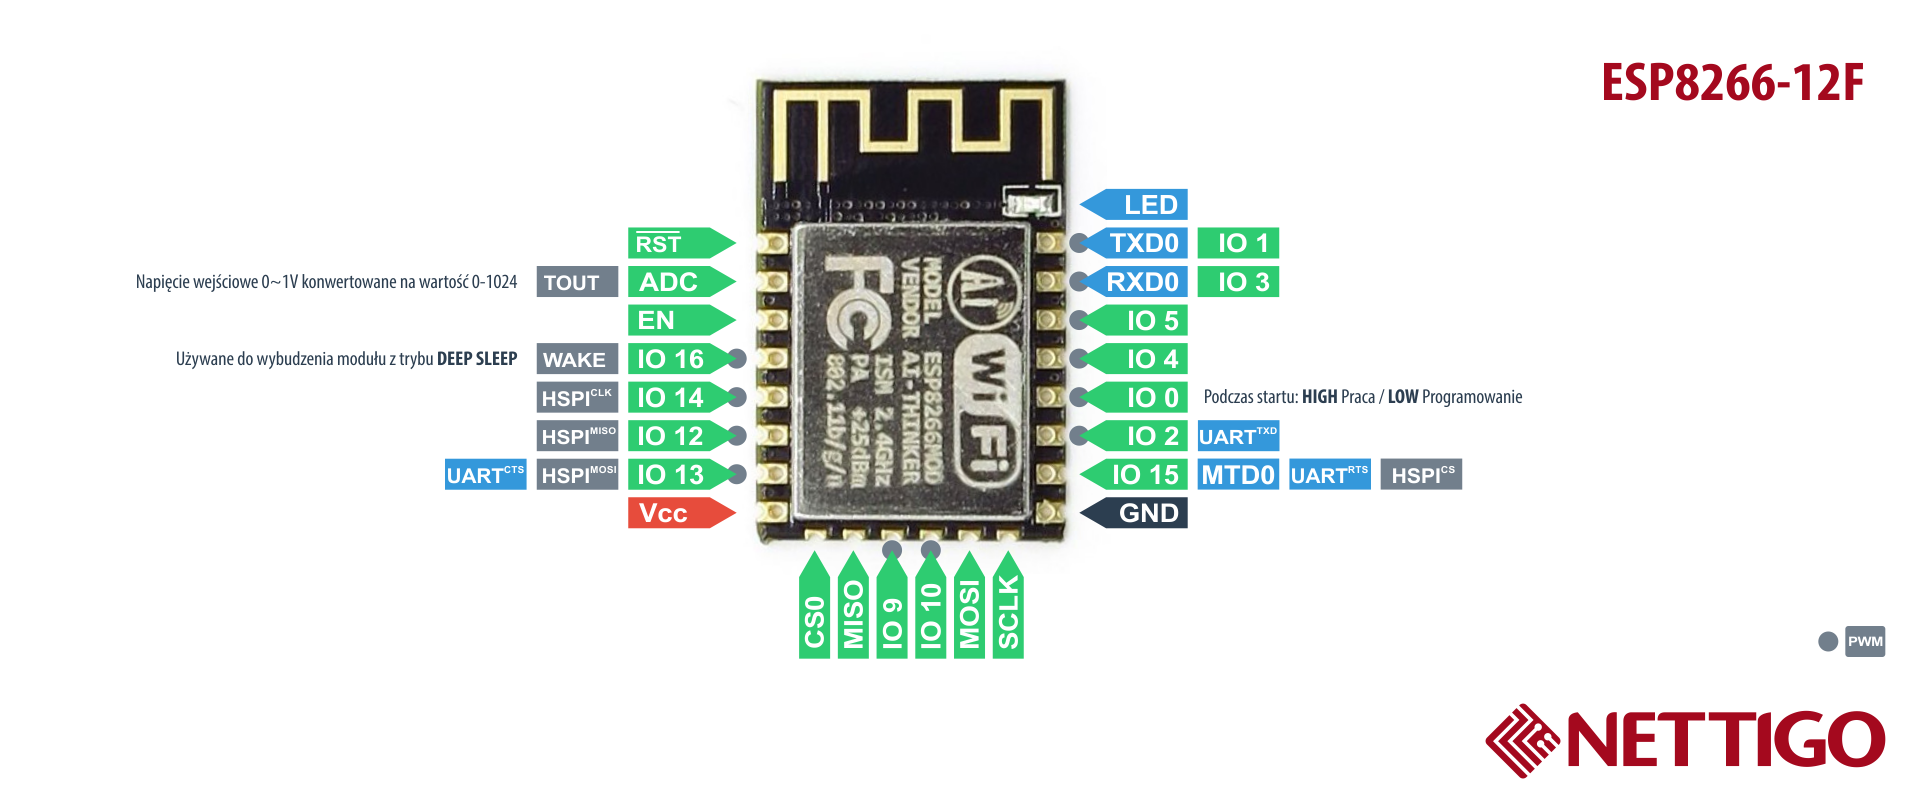 Nettigo: ESP-8266-12 WiFi module with 9 GPIO [AI Thinker]